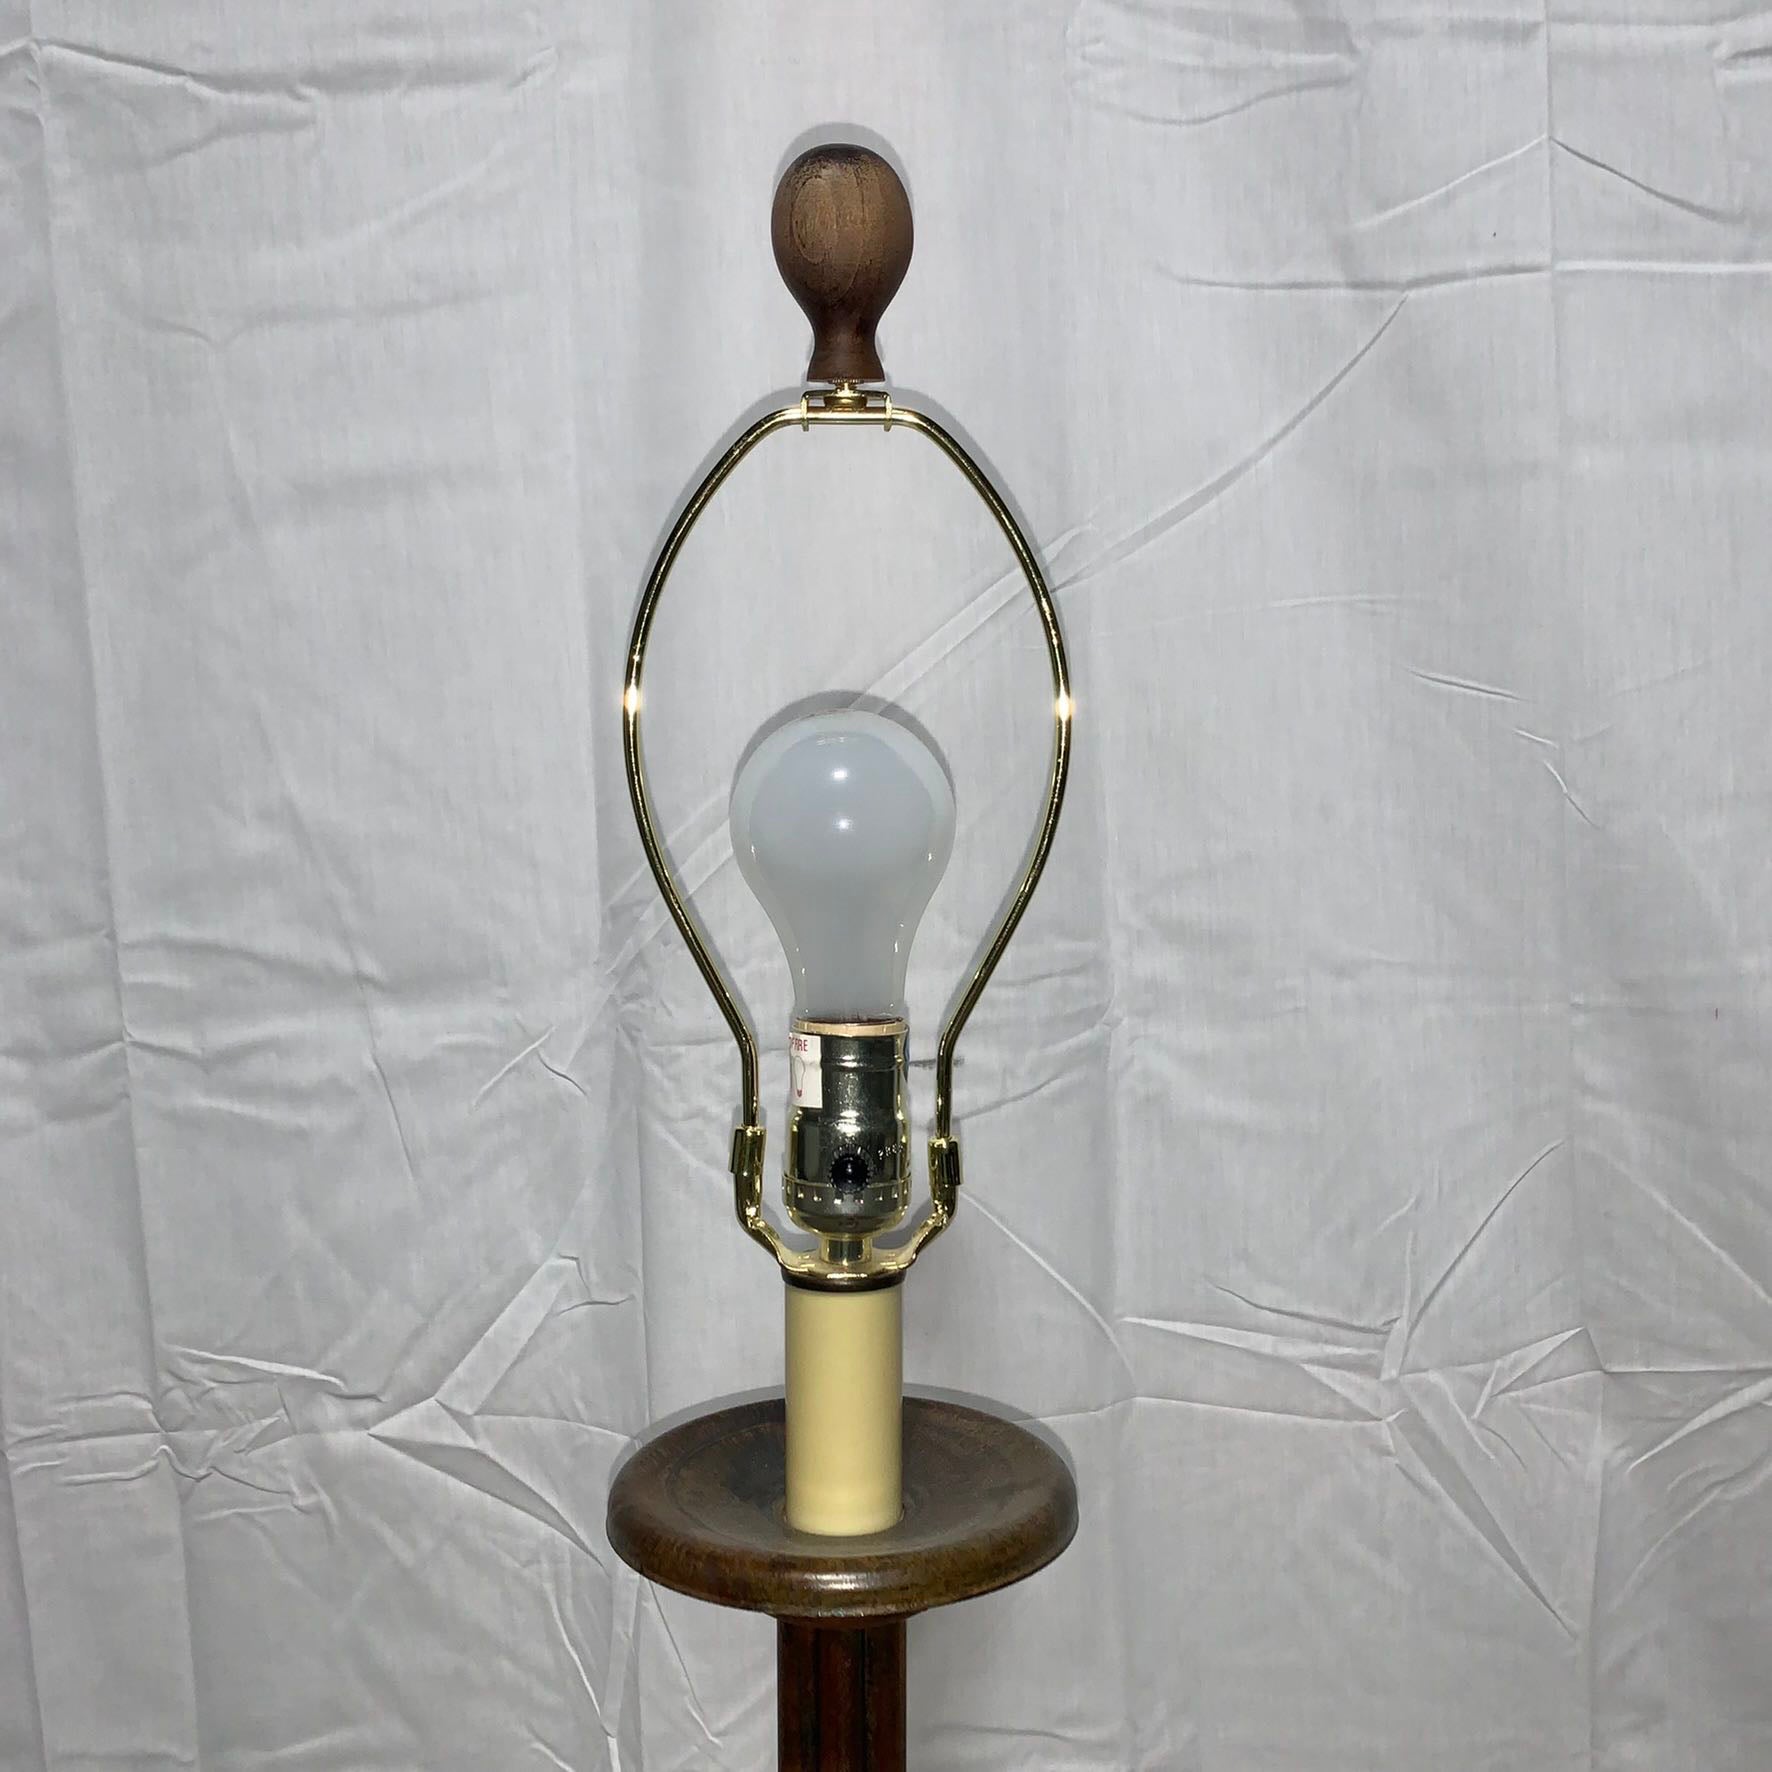 11" Diameter x 34" Rust Colored Iron 3 Legged Table Lamp